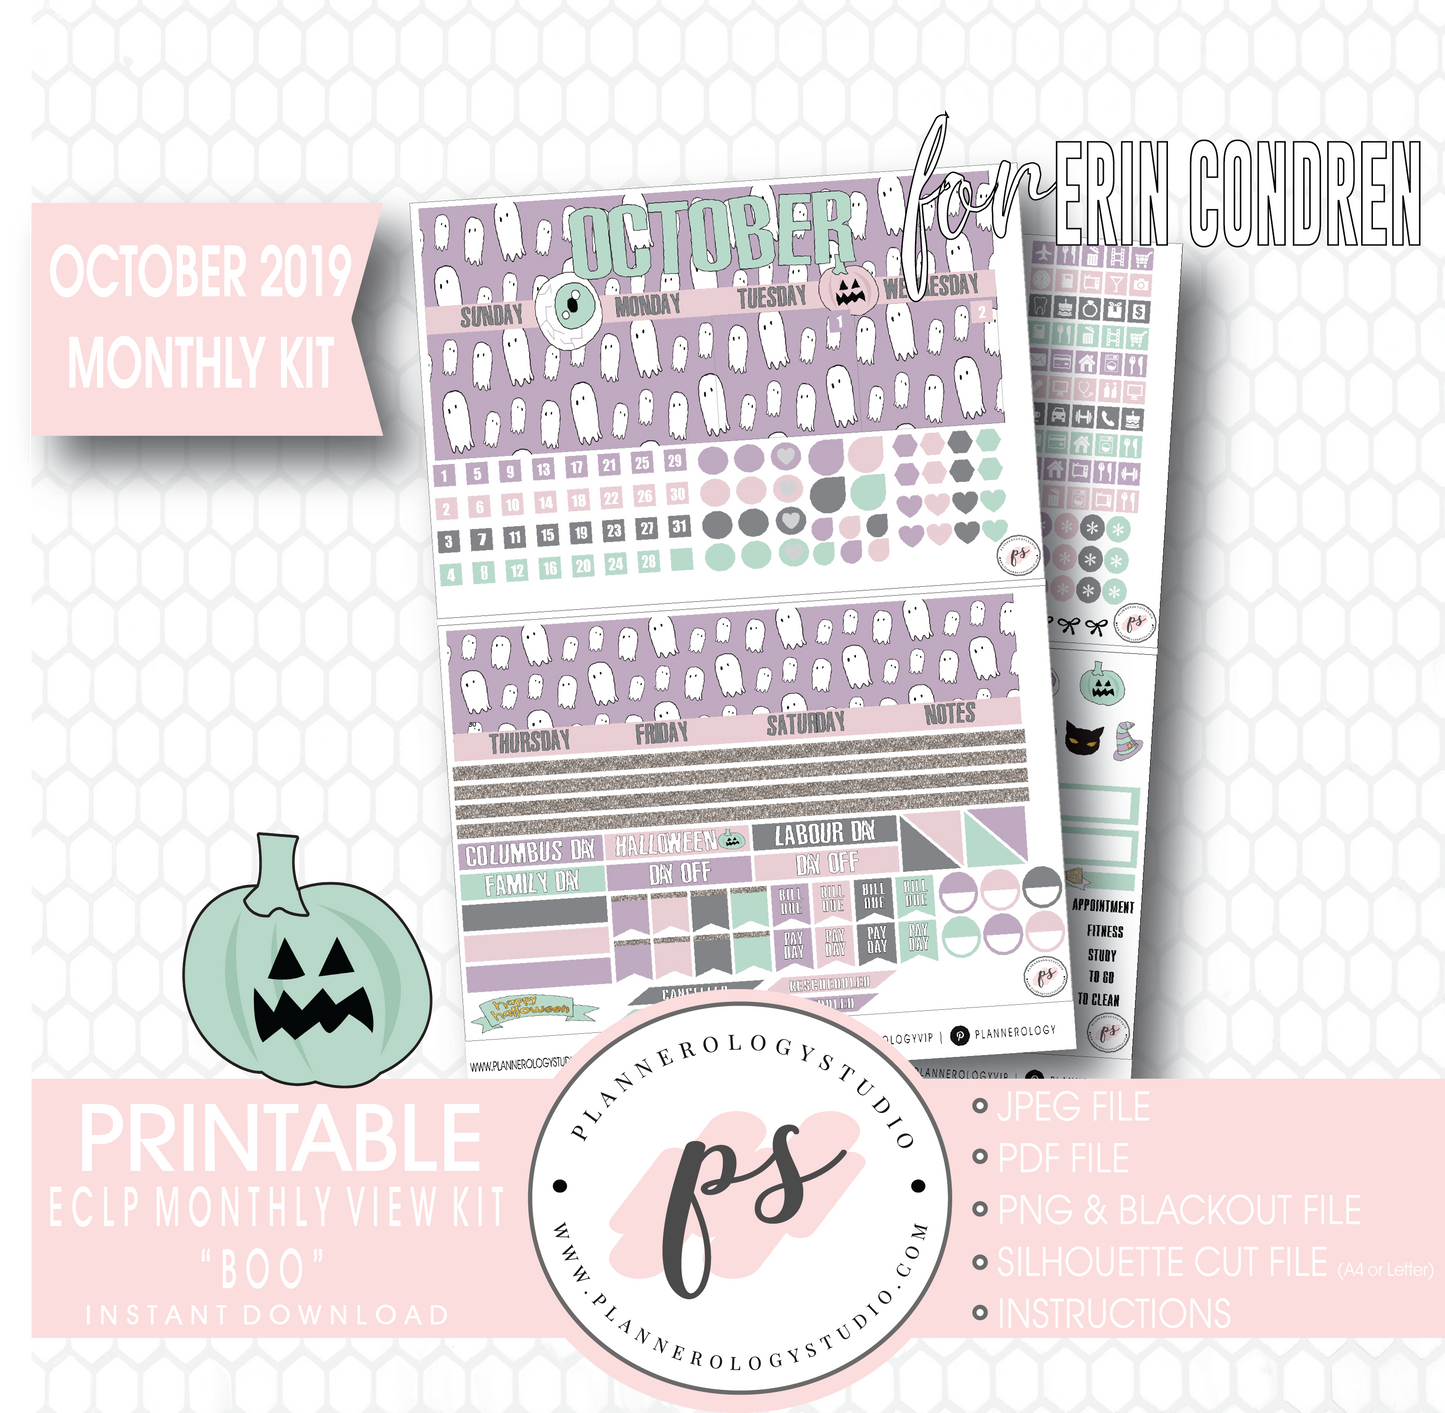 Boo October 2019 Halloween Monthly View Kit Printable Planner Stickers (for use with Erin Condren) - Plannerologystudio